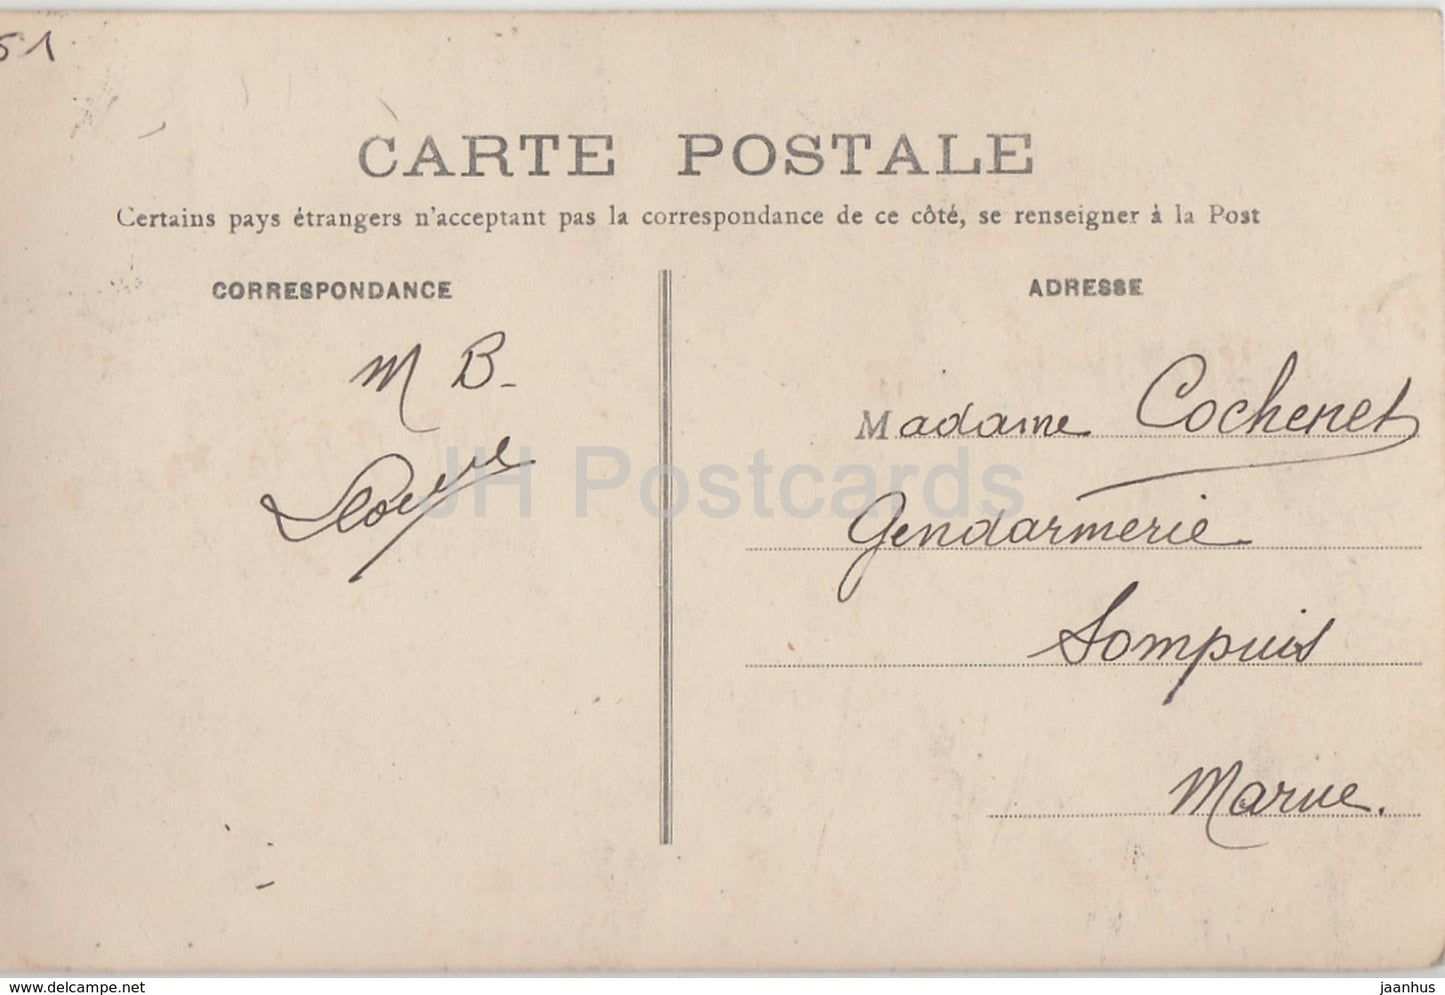 Epernay - Chateau de Boursault - Schloss - alte Postkarte - 1913 - Frankreich - gebraucht